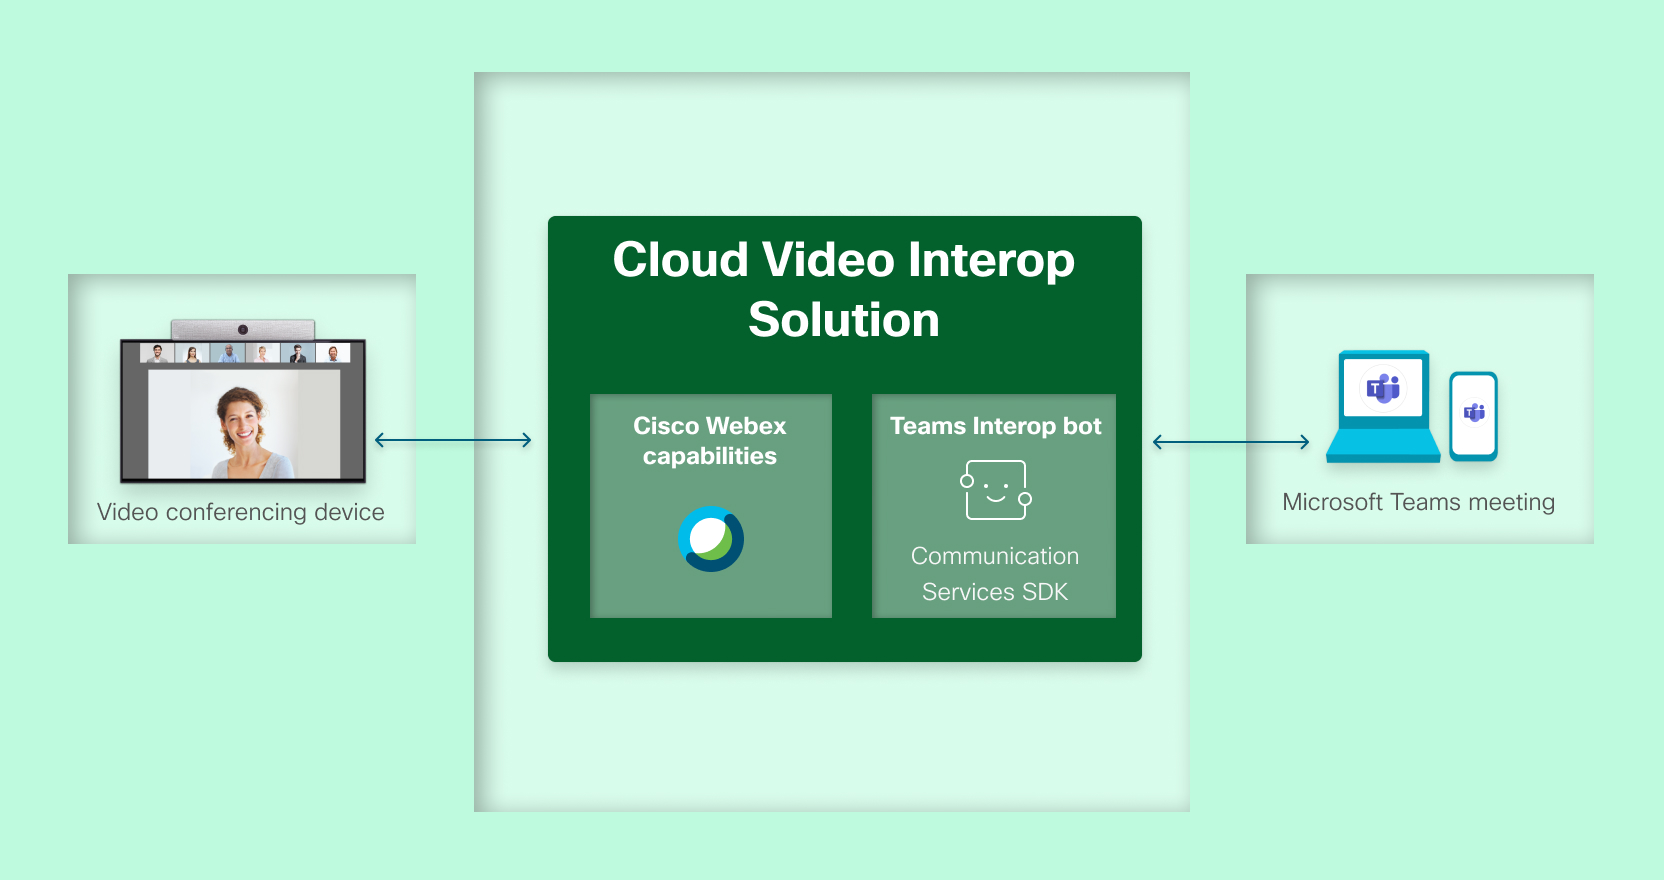 CVI 架構映像依據 https://docs.microsoft.com/en-us/microsoftteams/cloud-video-interop